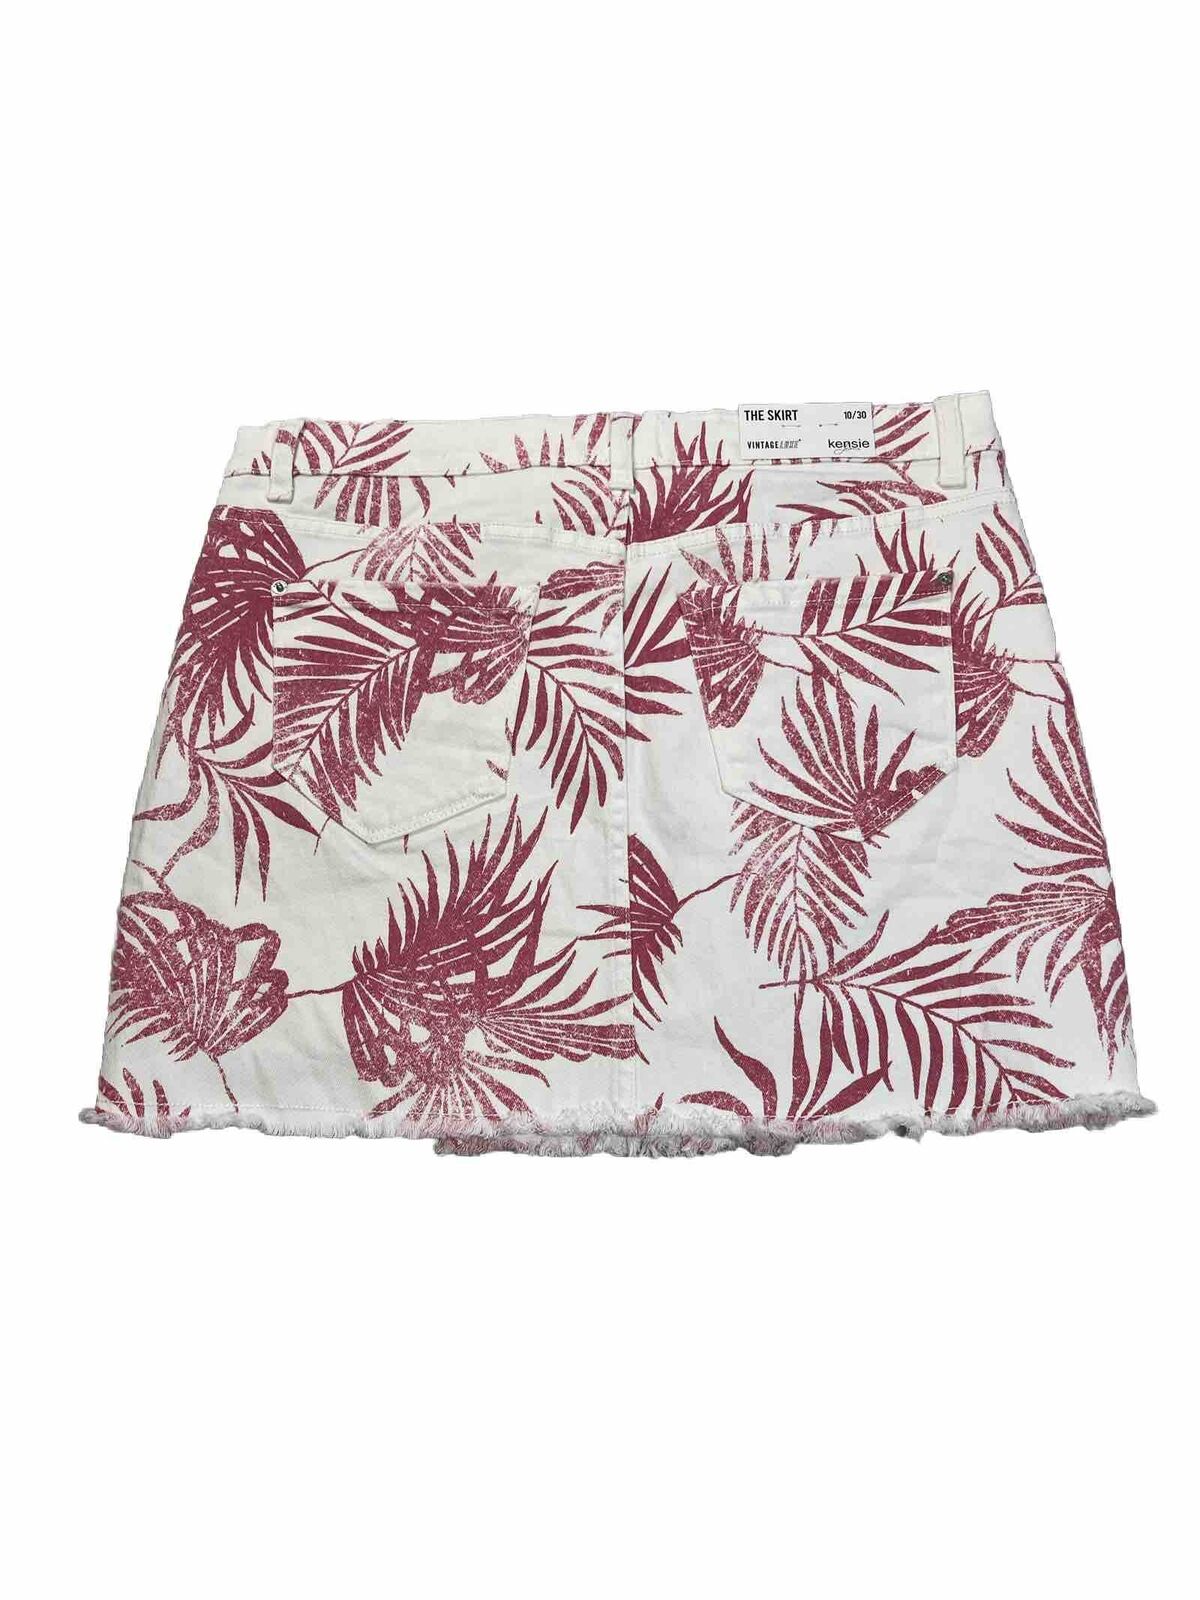 NEW Kensie Women's White Palm Leaf Print Denim Skirt - 10/30